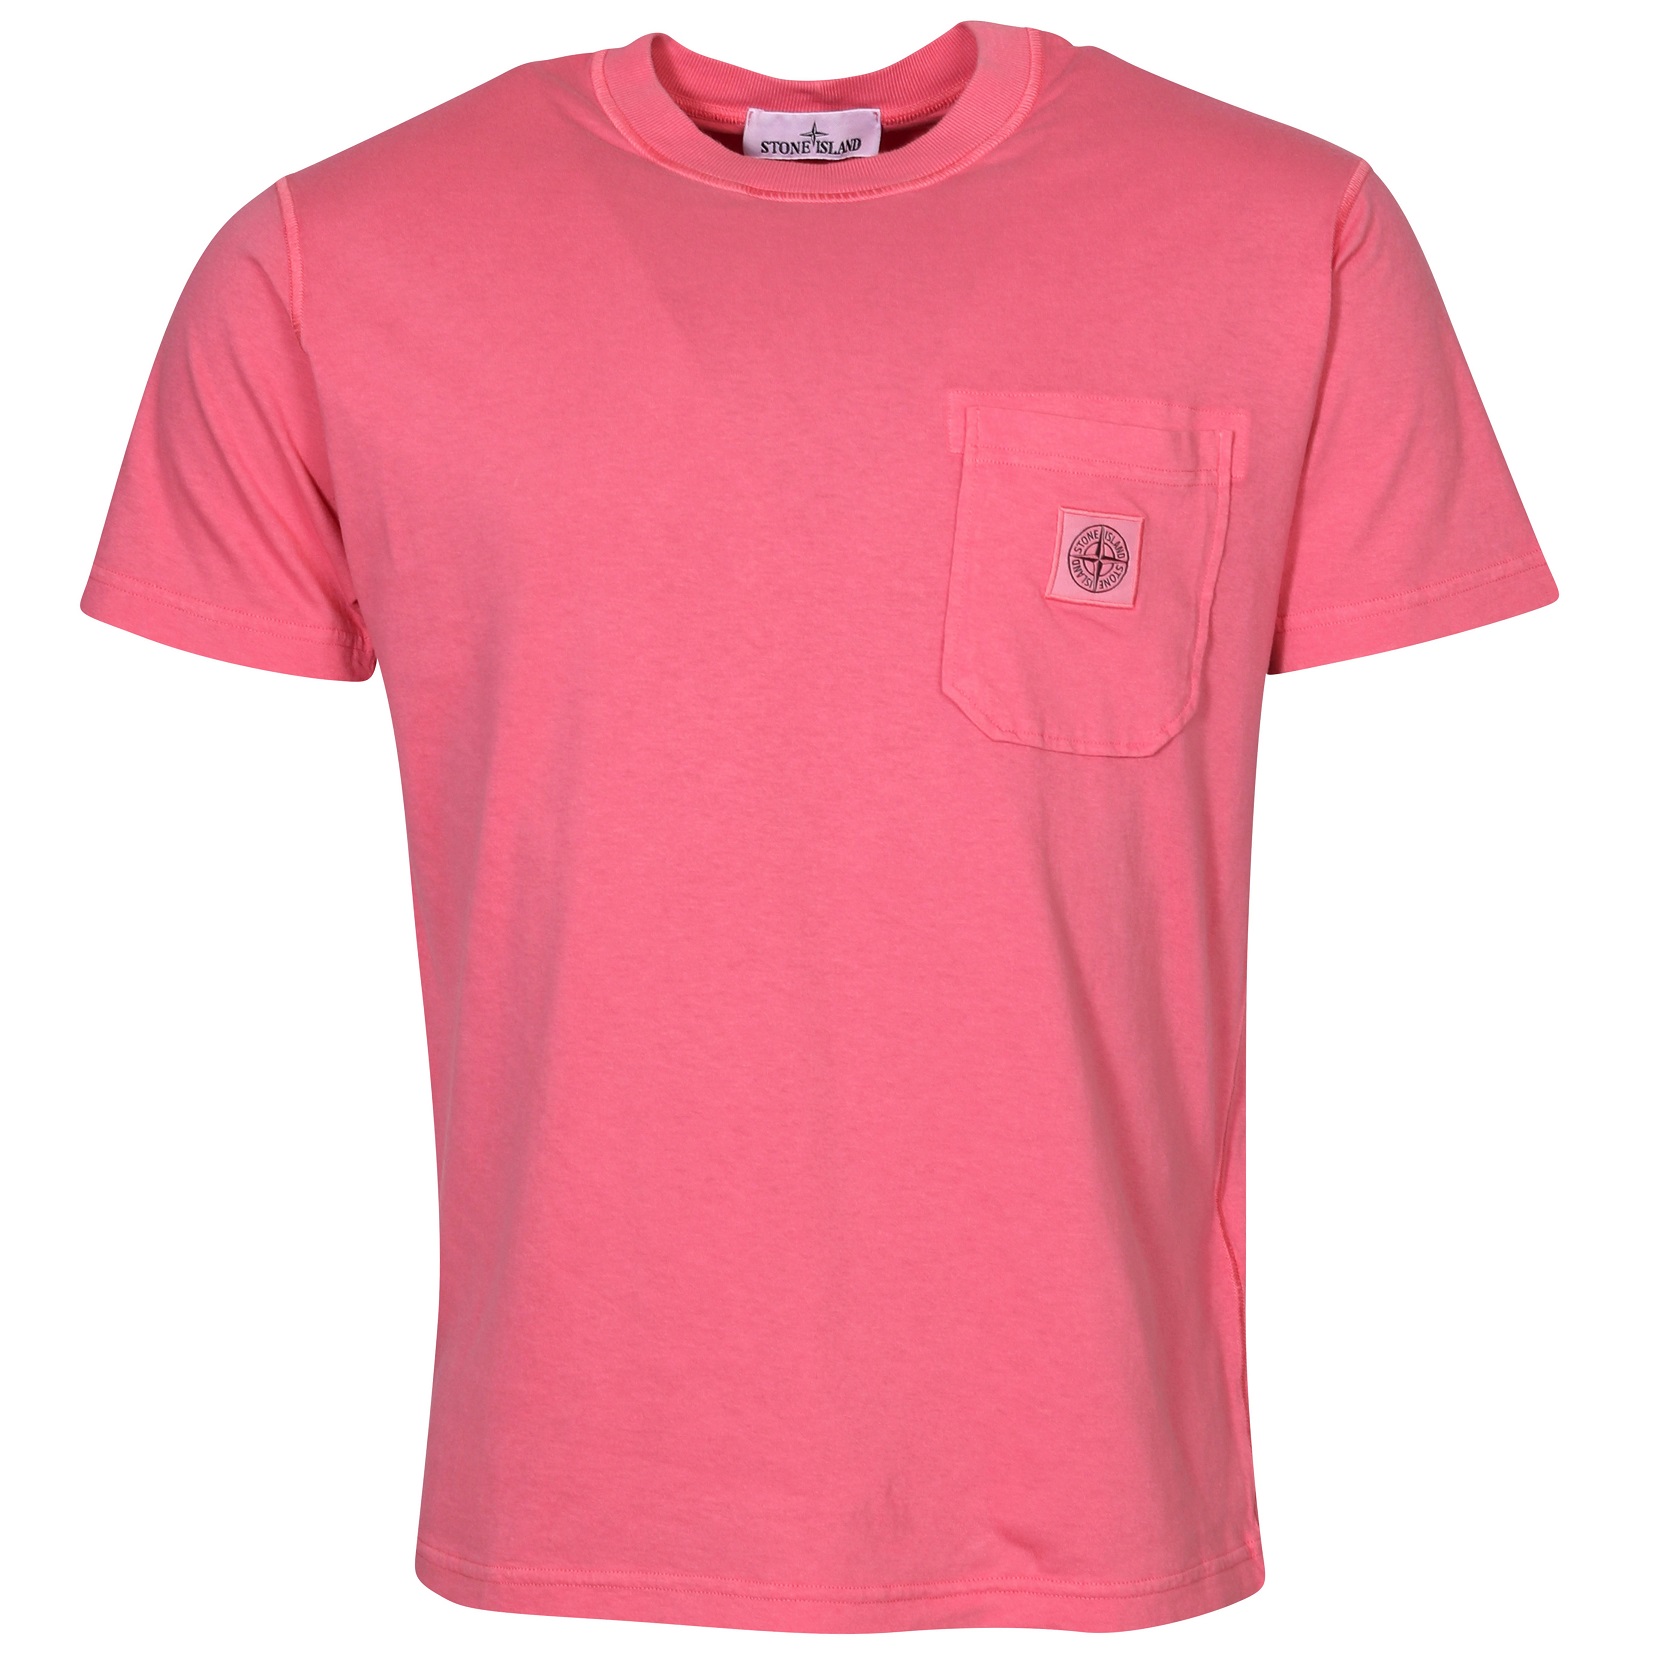 STONE ISLAND Pocket T-Shirt in Washed Fuchsia M